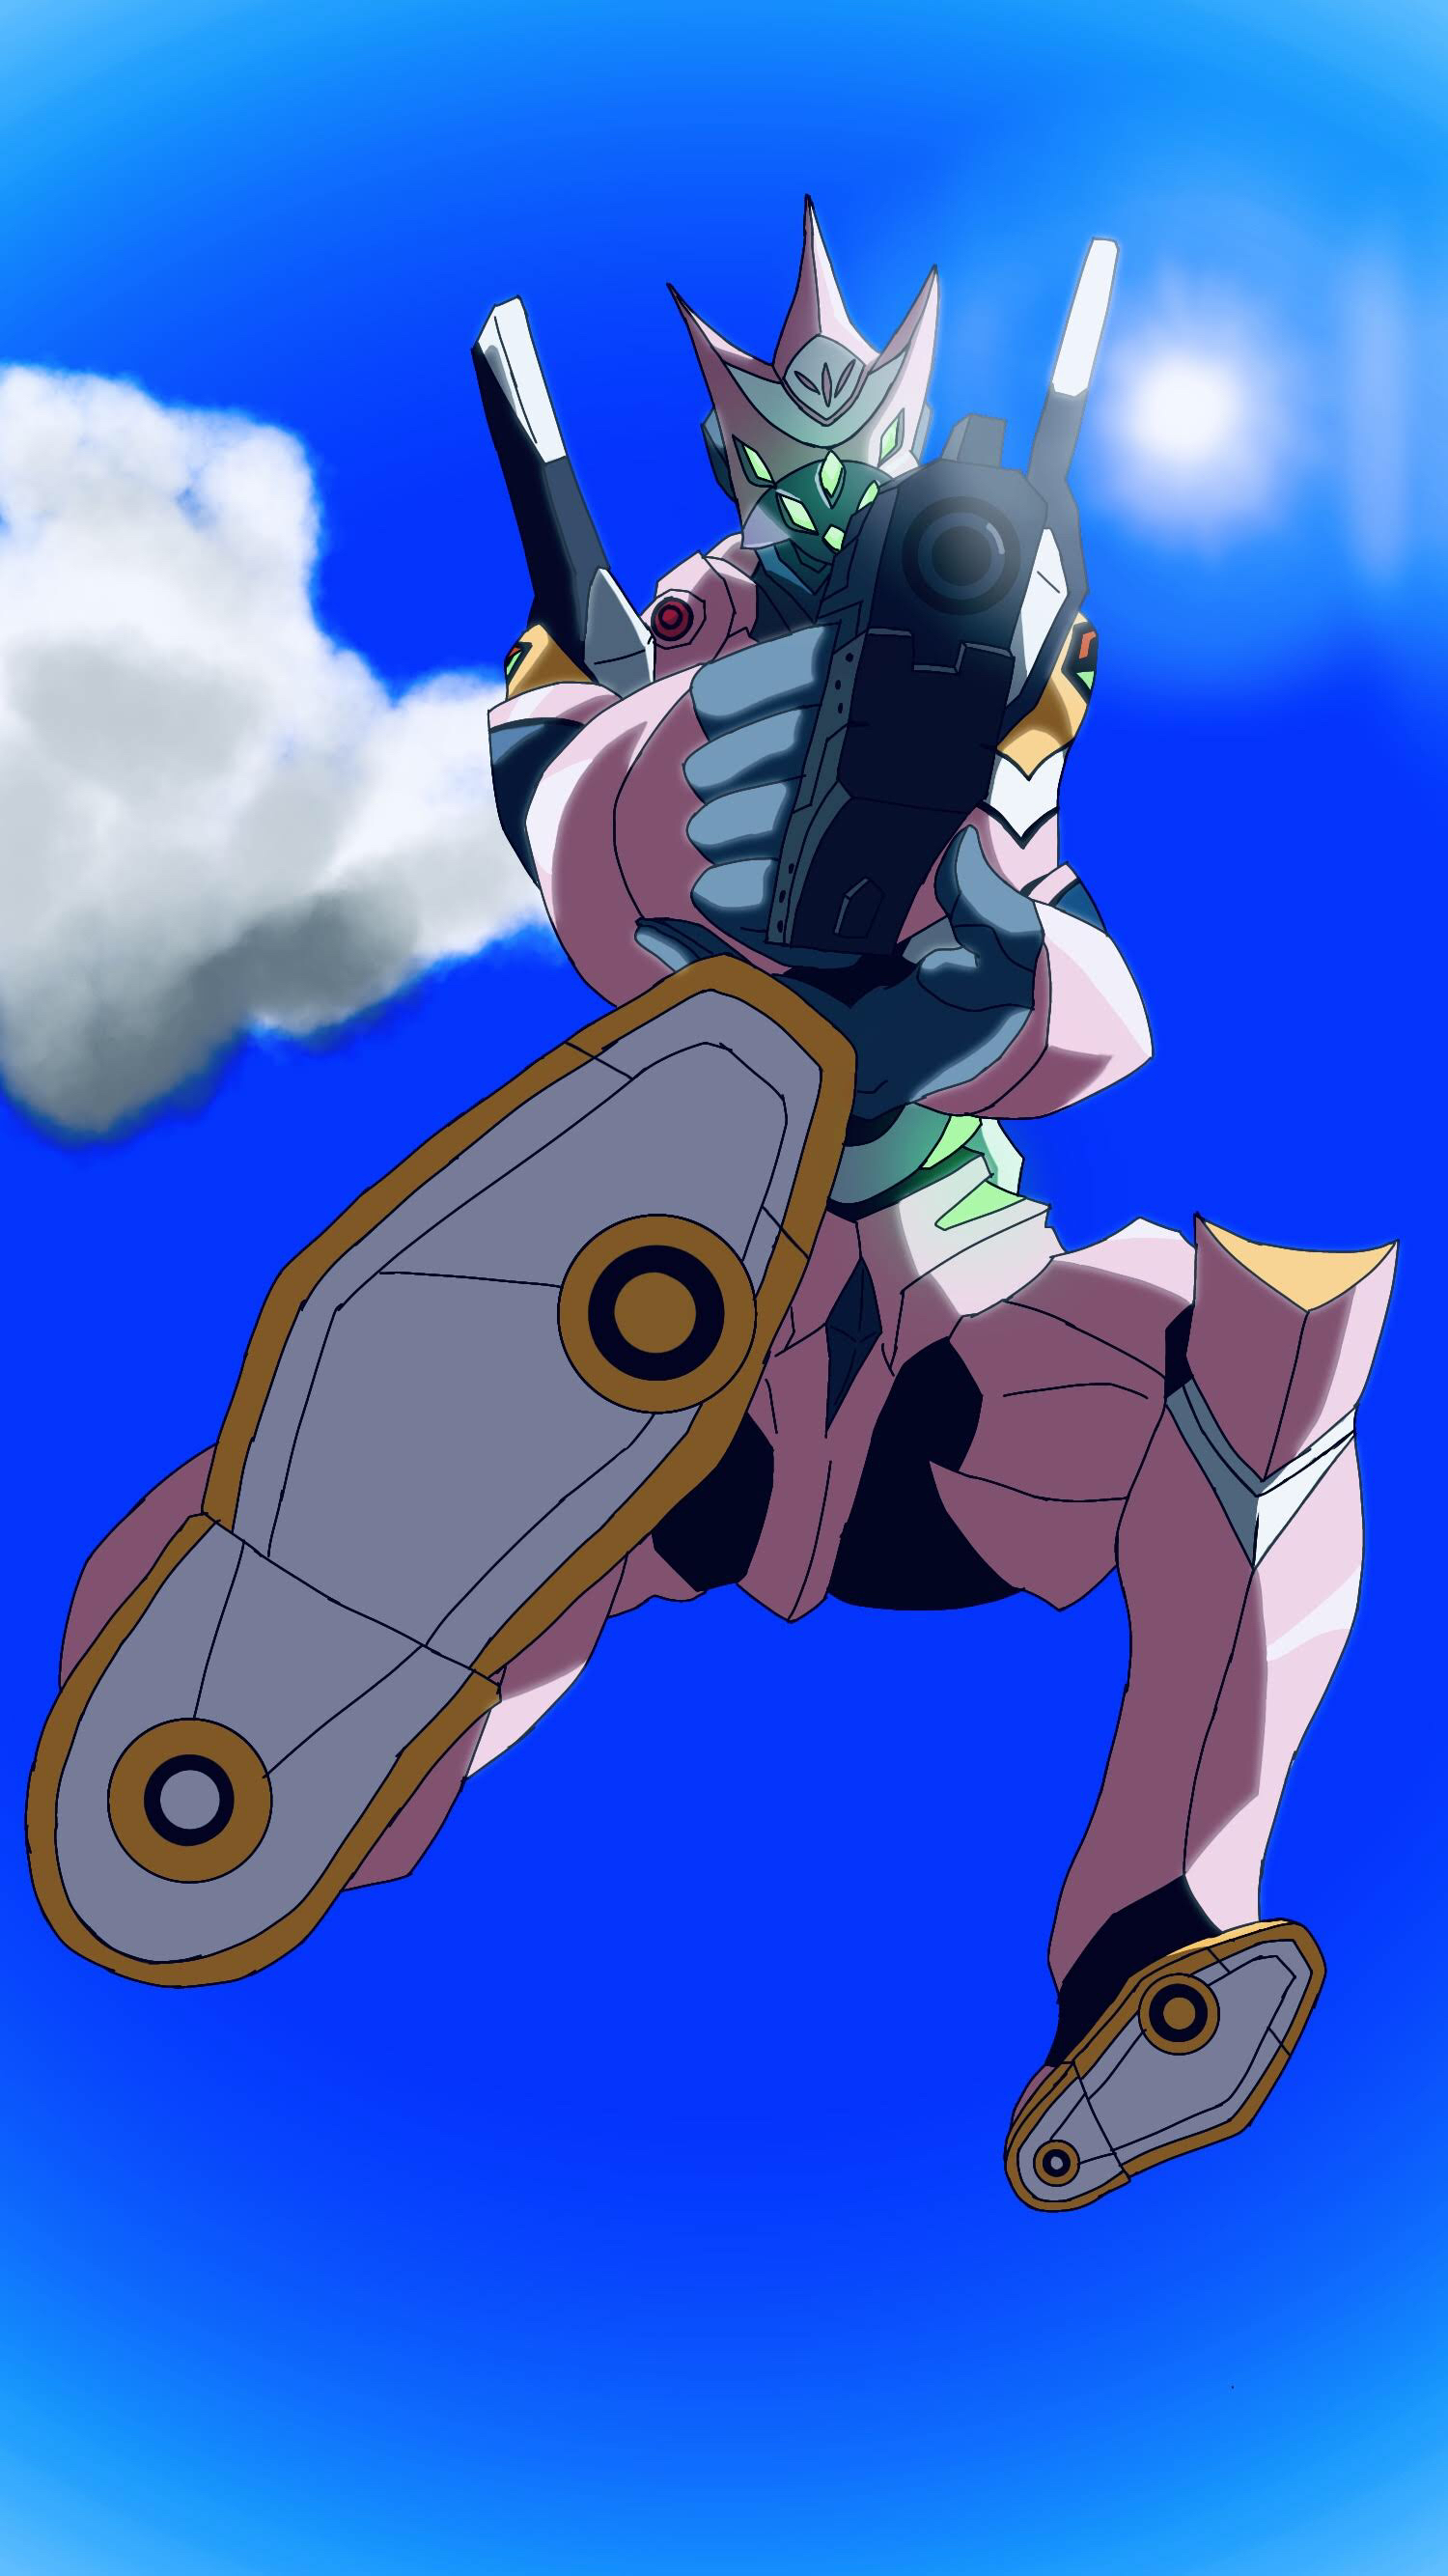 EVA Unit 08 Neon Genesis Evangelion Super Robot Taisen Mechs Anime Artwork Digital Fan Art 1500x2668